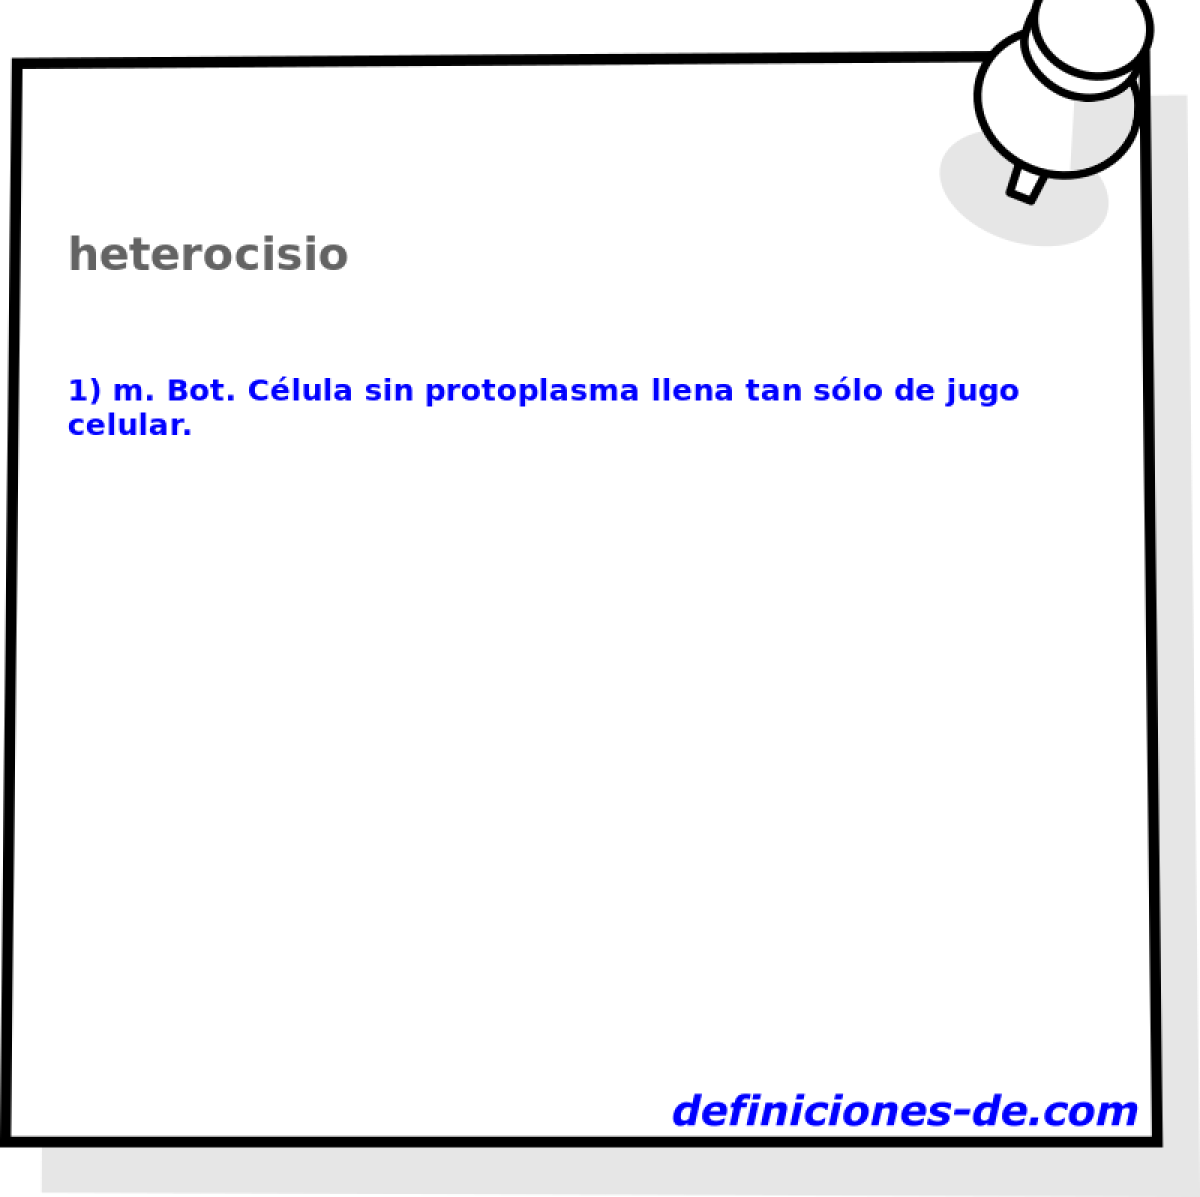 heterocisio 